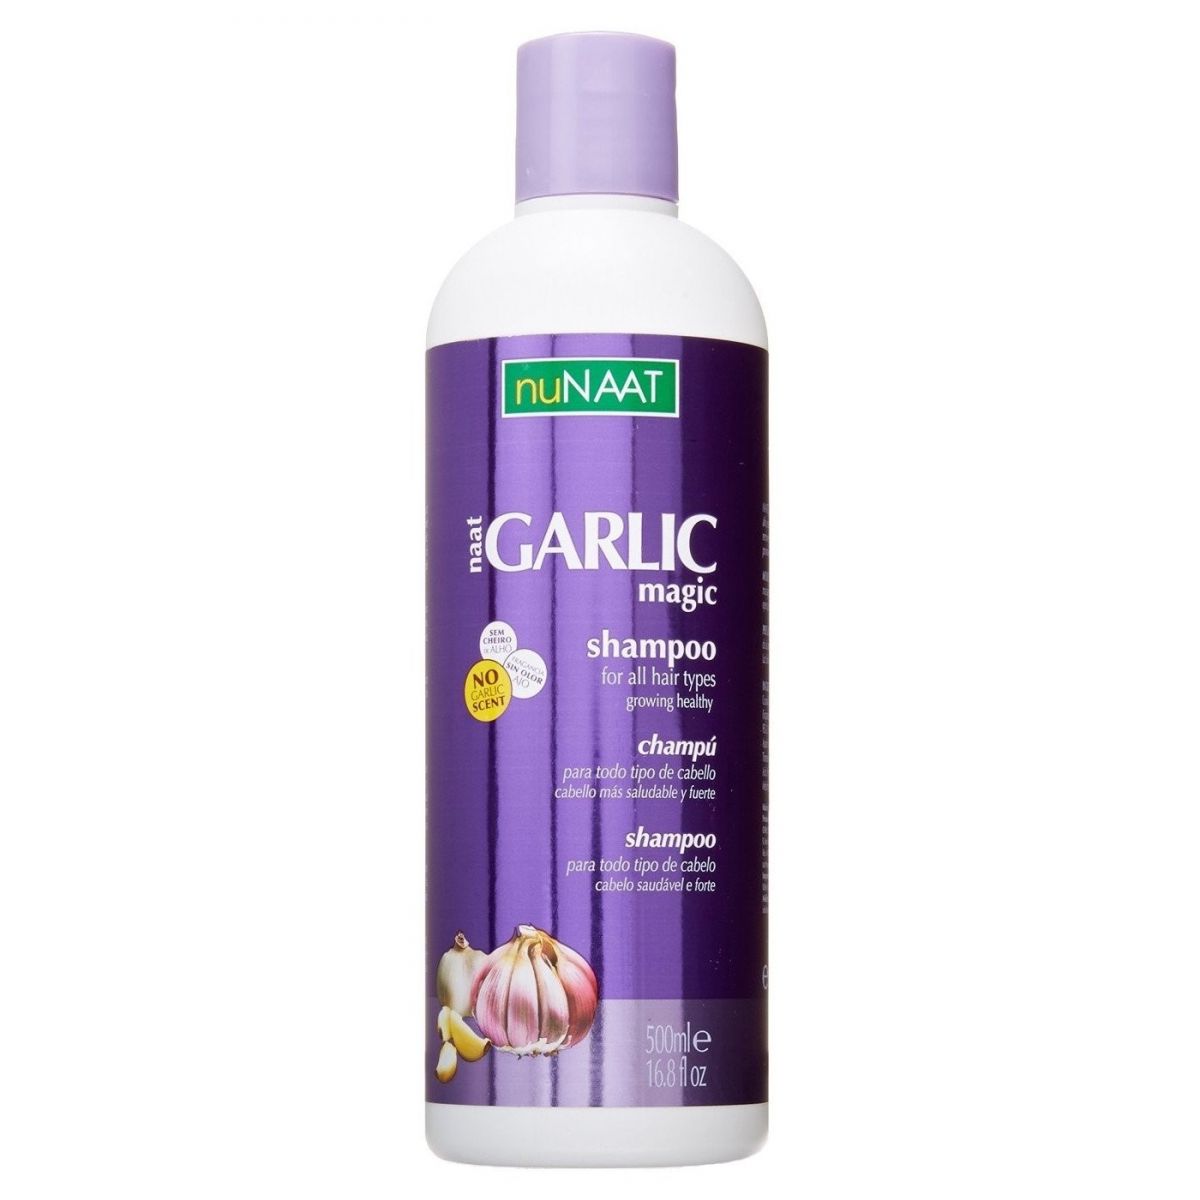 Nunaat Garlic Magic Shampoo 300 ml